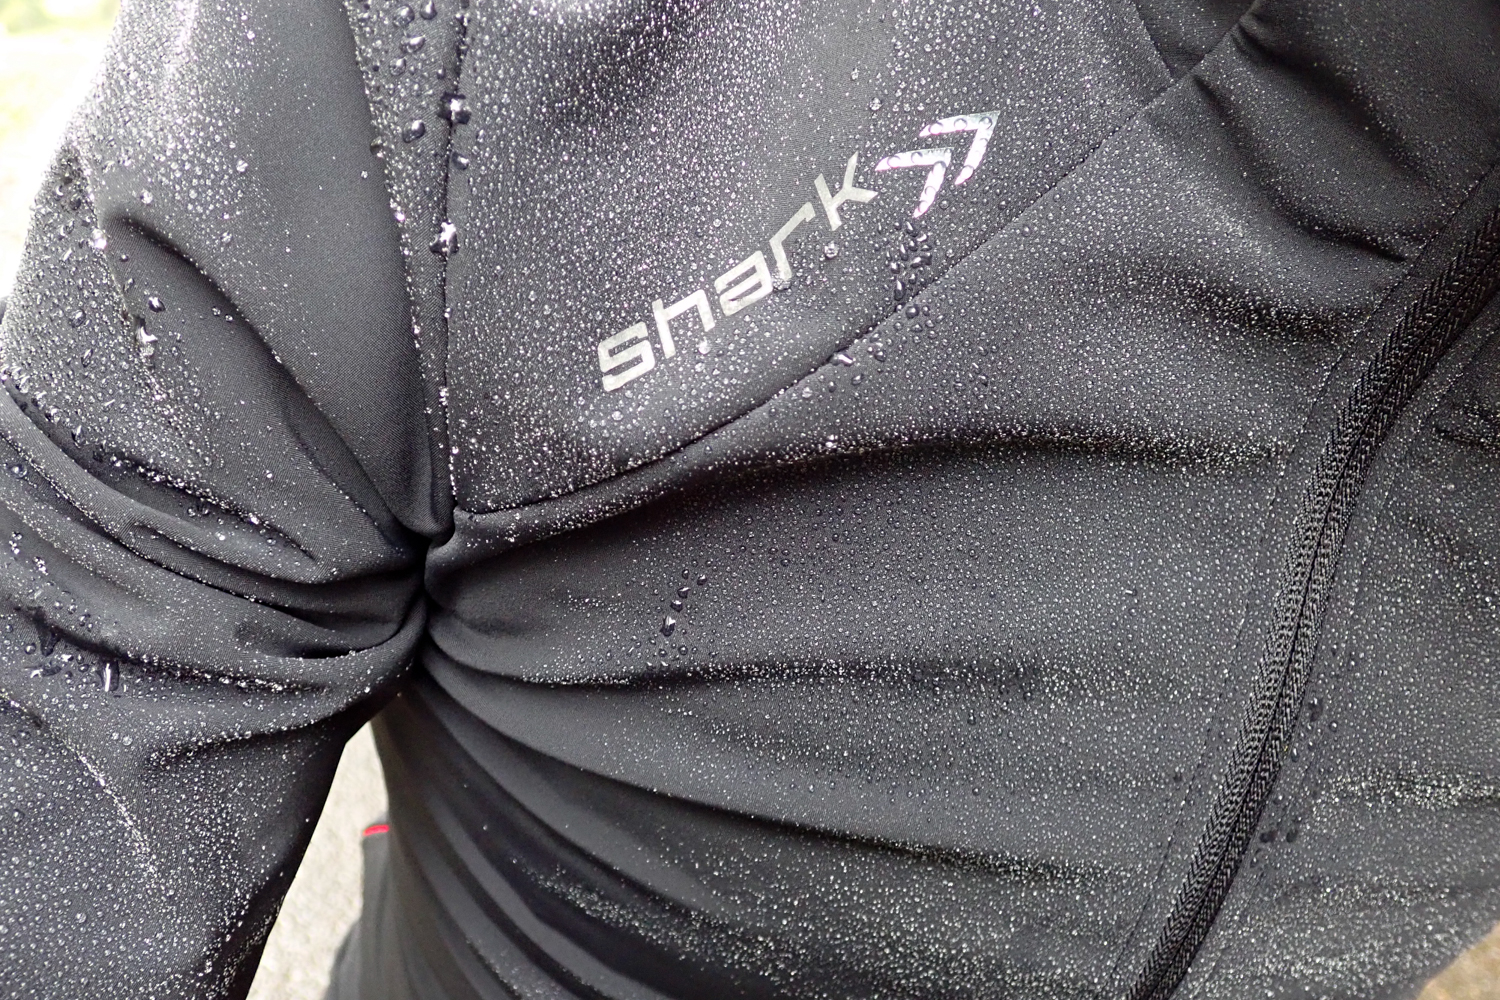 RH+ Shark jacket cycling apparel